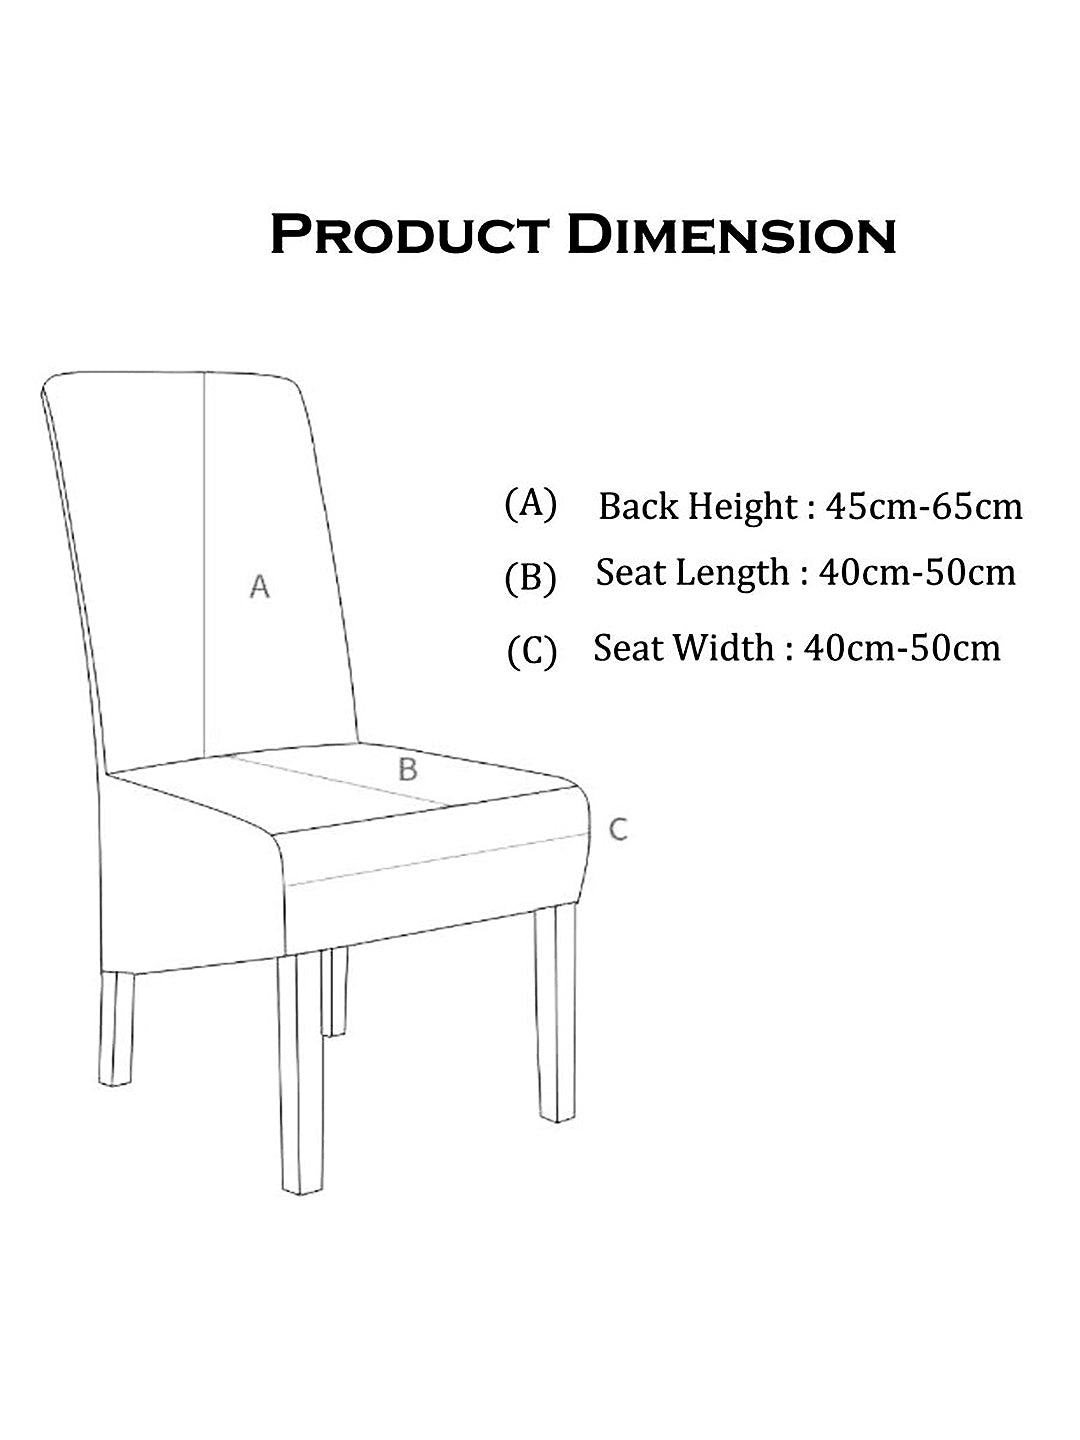 Elastic Geometric Printed Non-Slip Dining Chair Covers Set of 4 - Cream